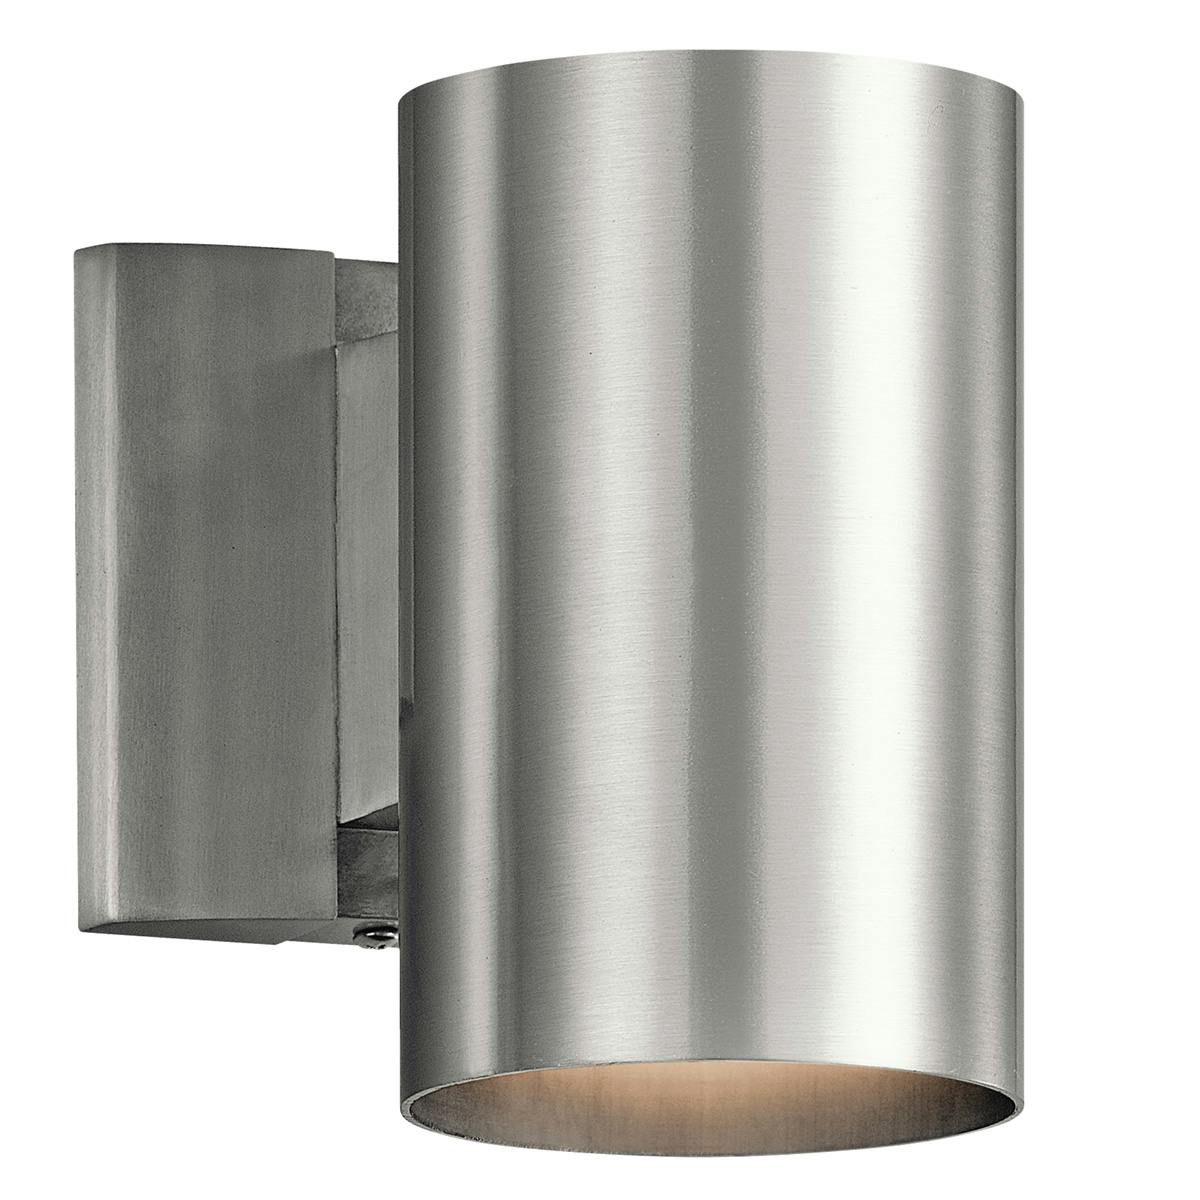 Cylinder 7" Wall Light Brushed Aluminum on a white background